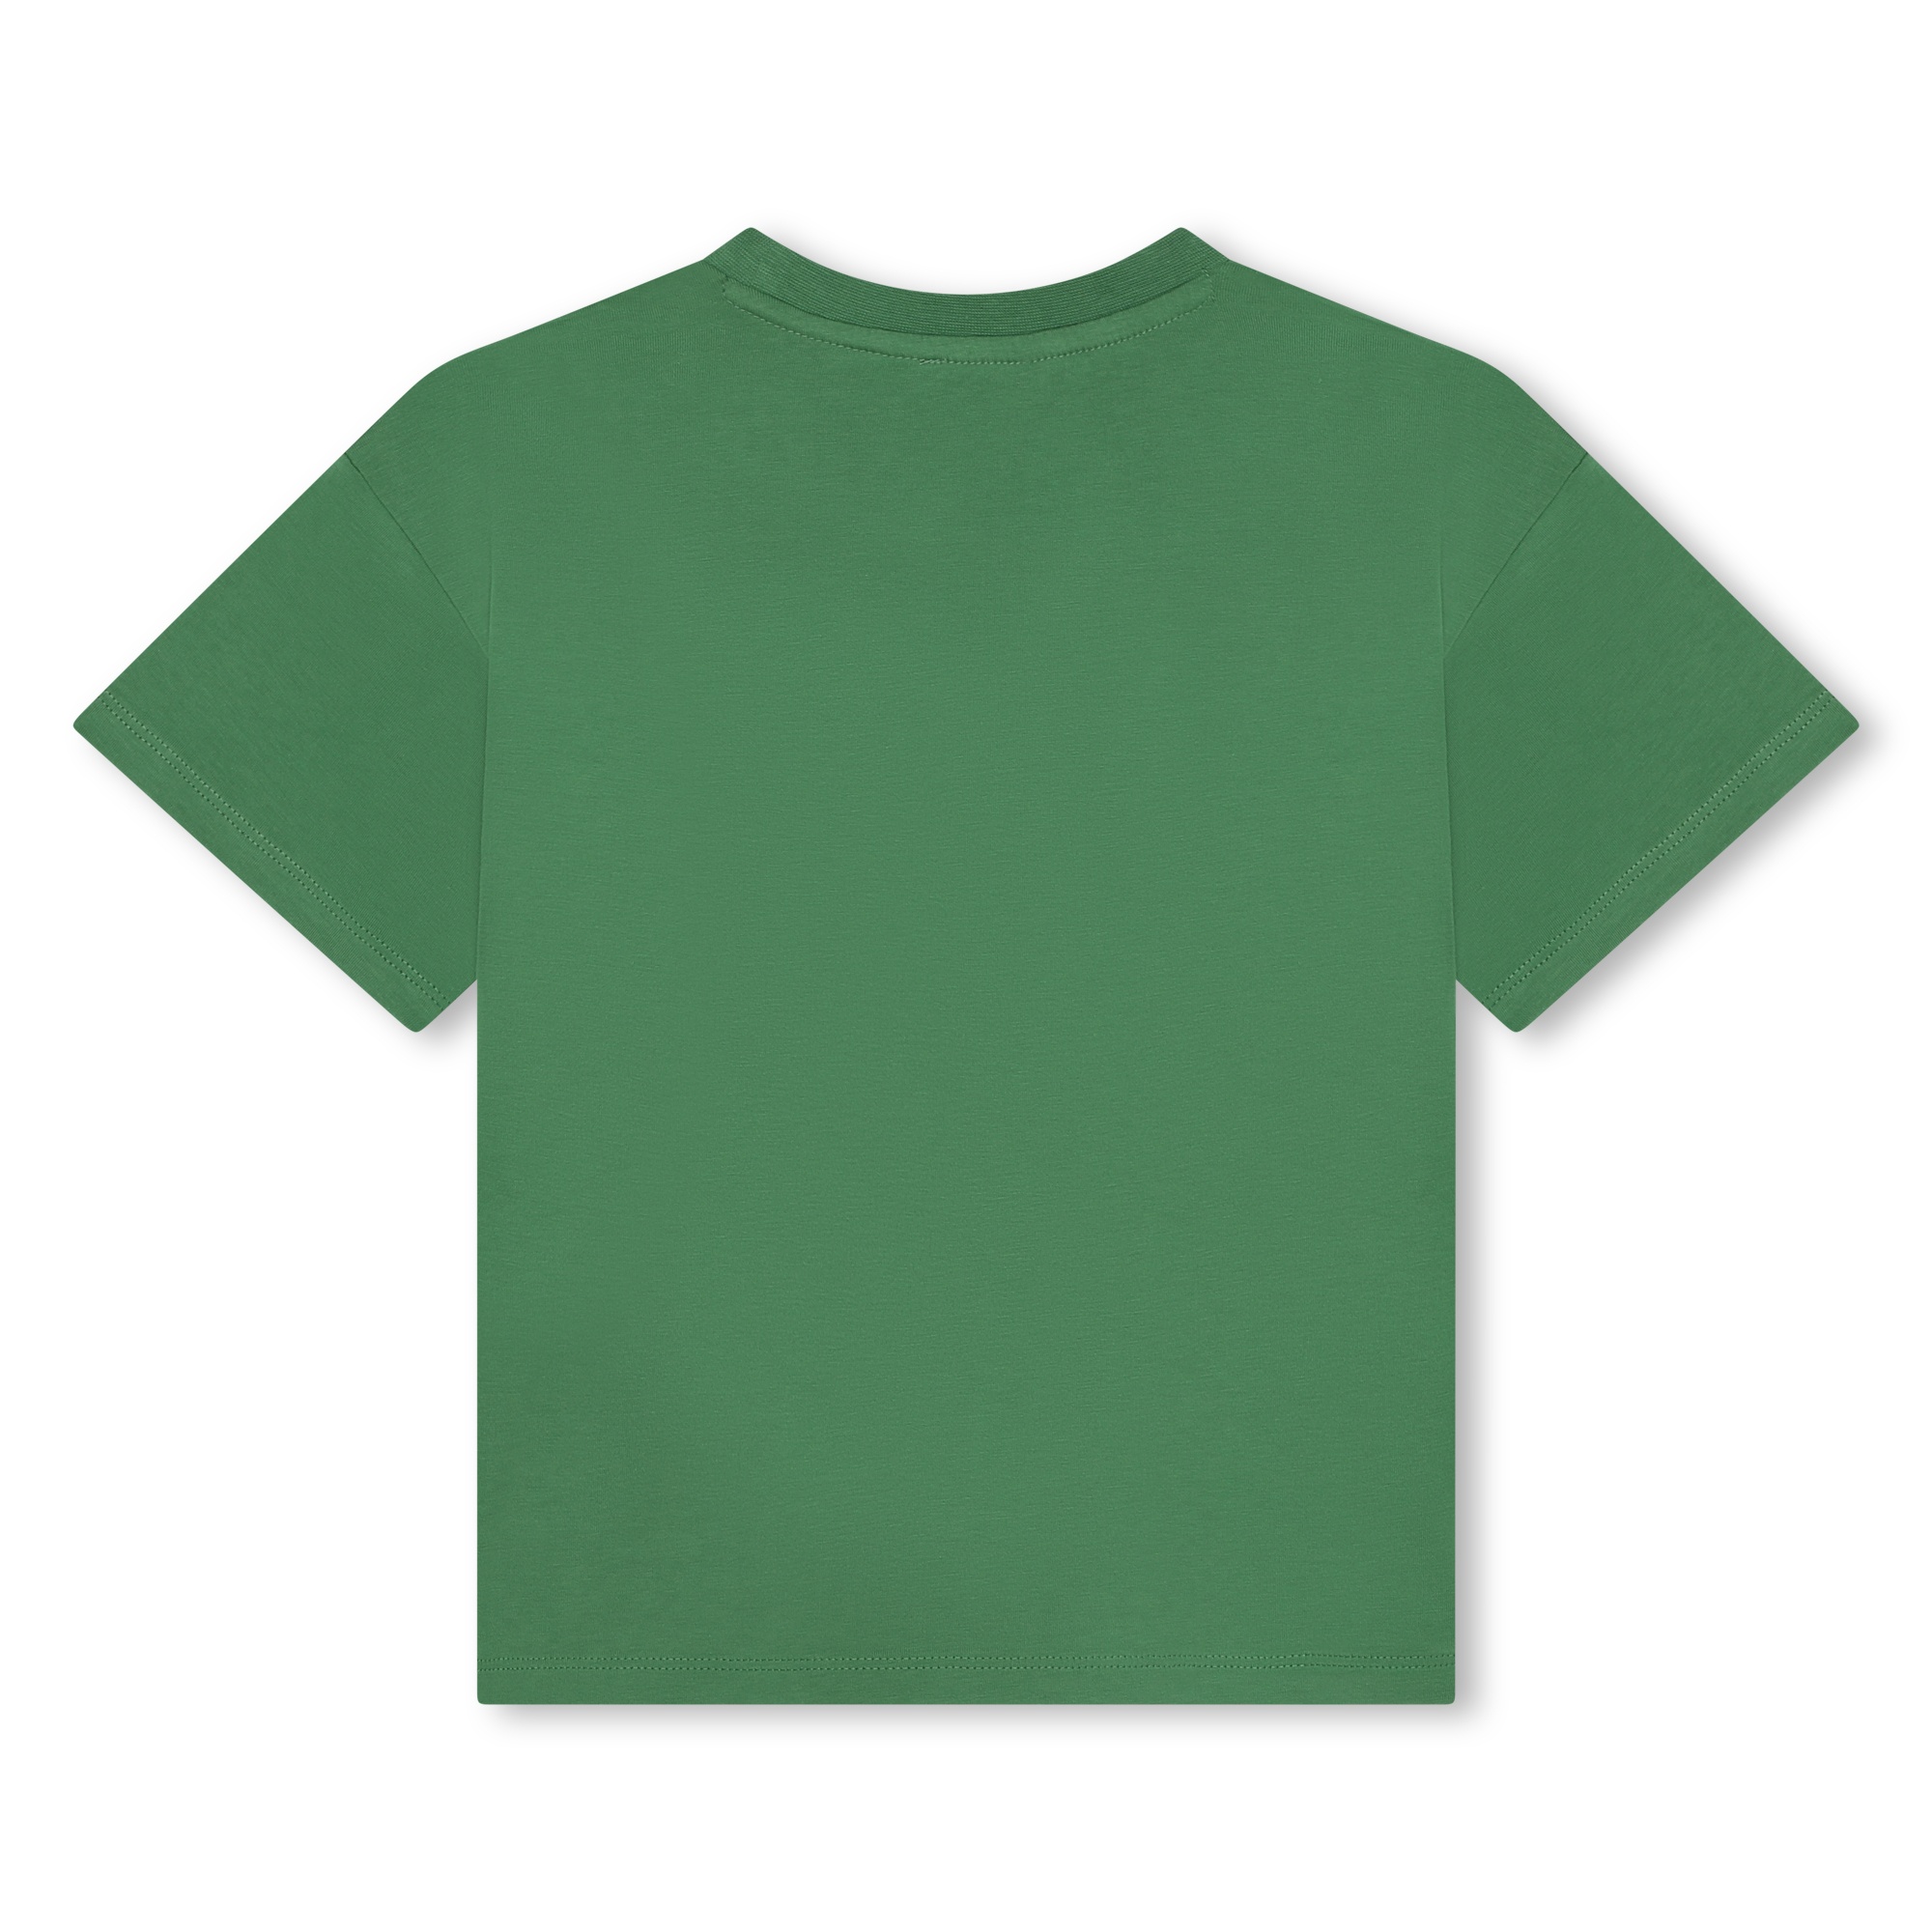 Camiseta algodón manga corta KENZO KIDS para NIÑO